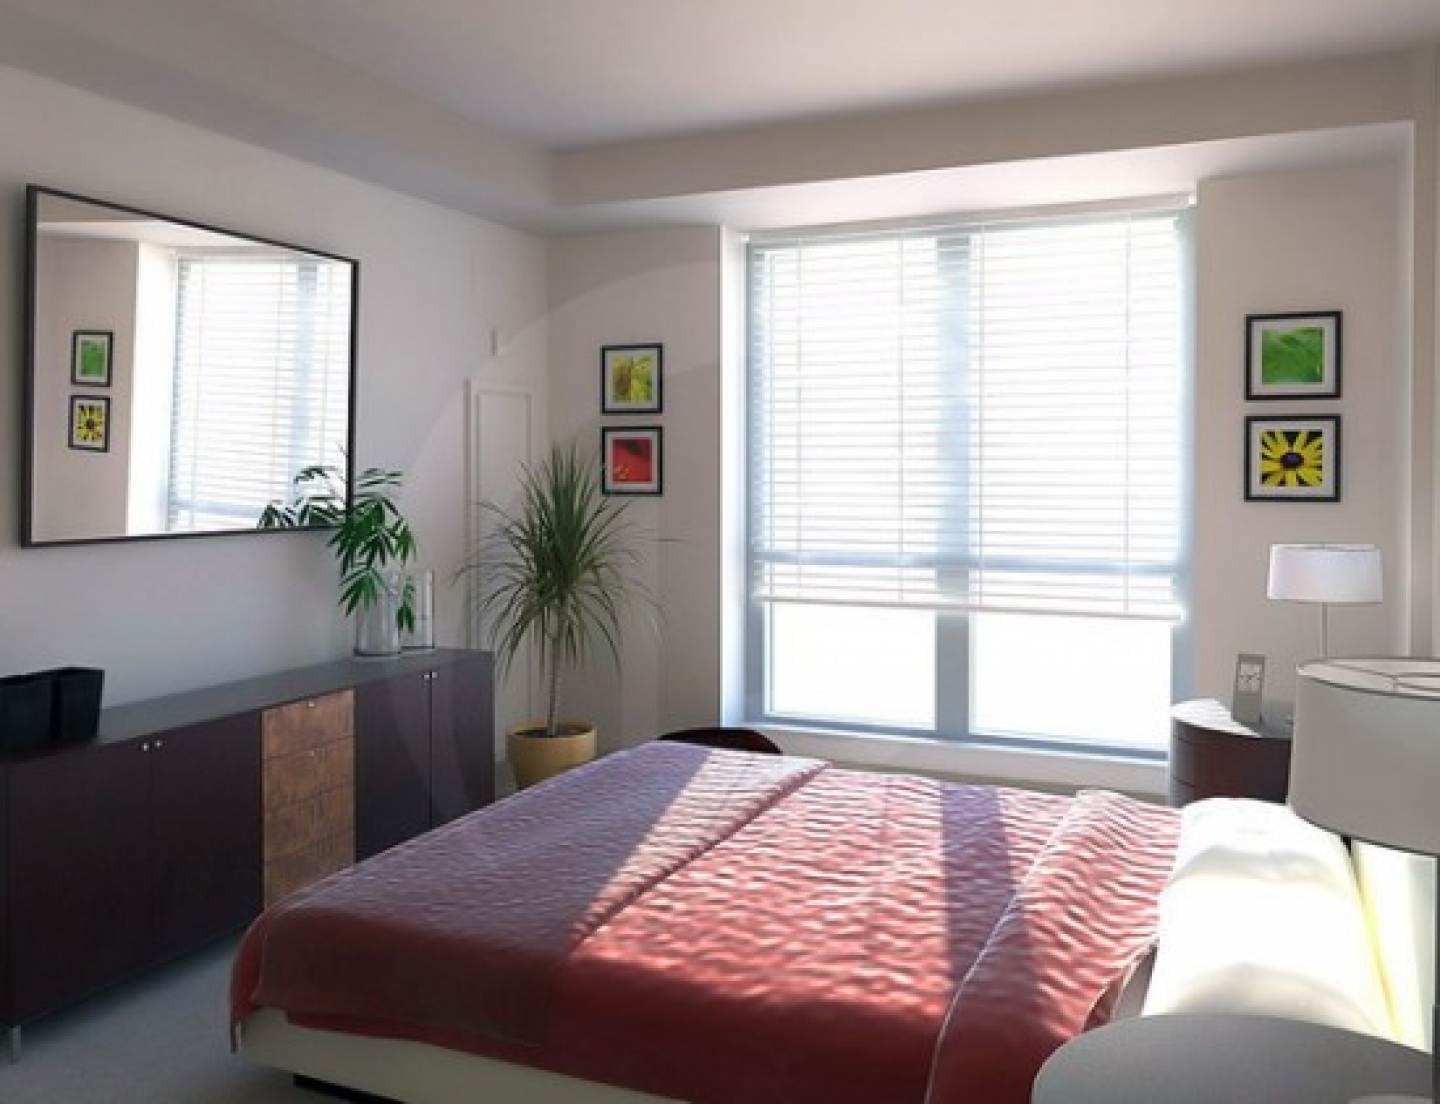 Simple Interior Design Ideas For Small Bedroom
